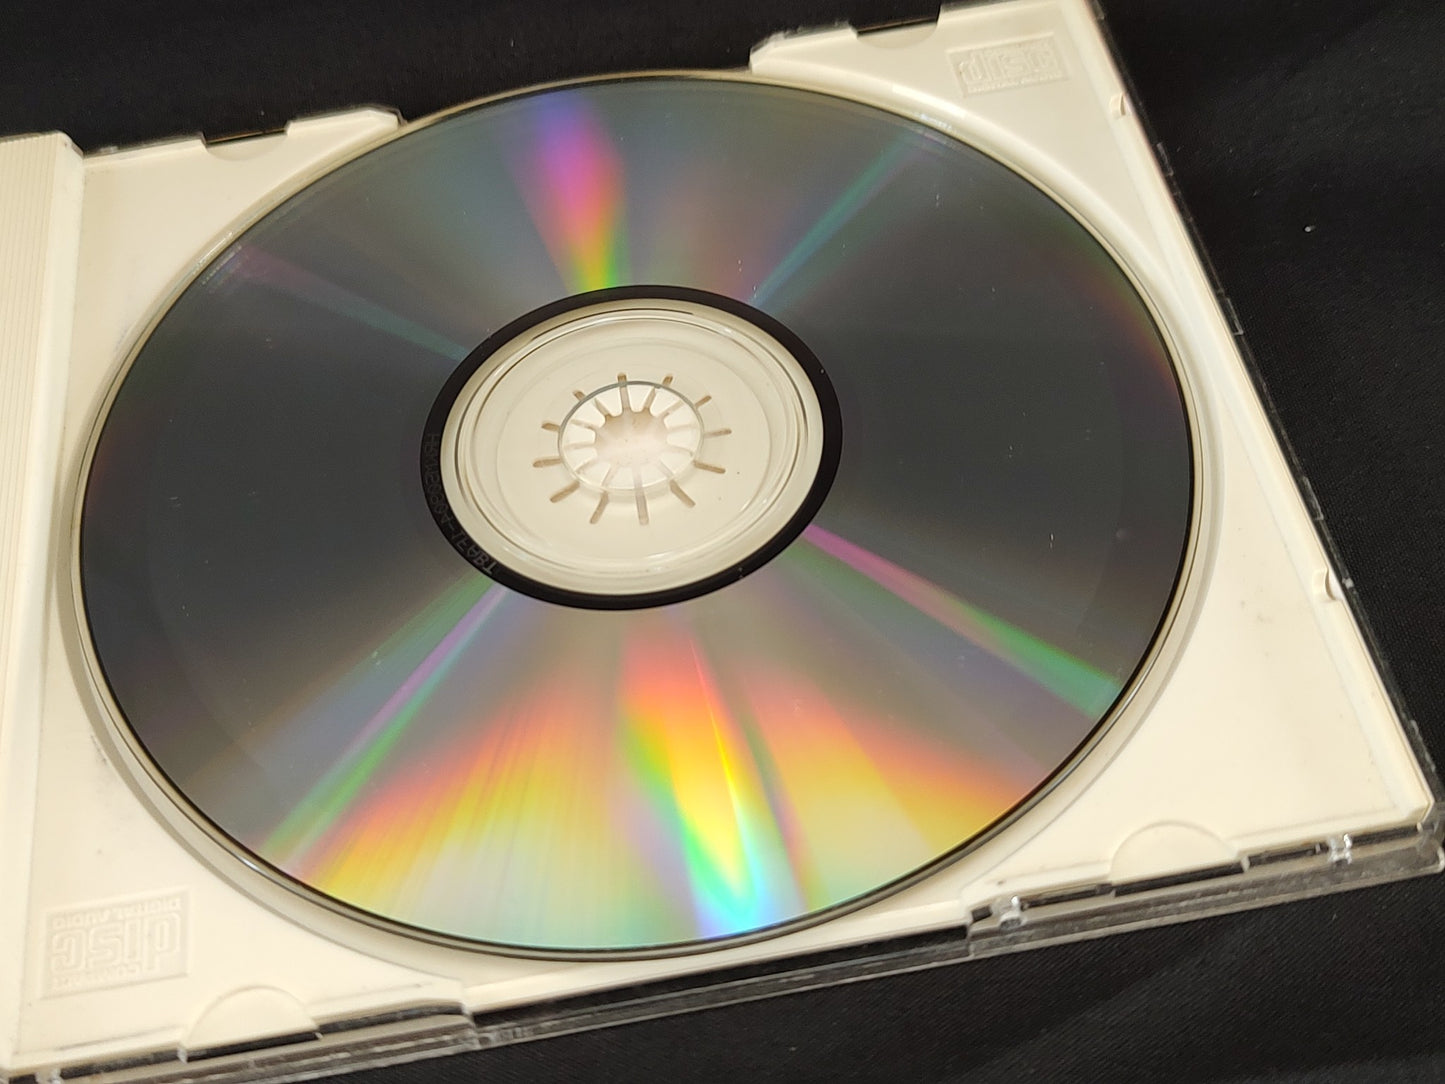 Akumajou Dracula X Chi no Rondo Castlevania PC Engine CD-ROM2, Working-f0728-